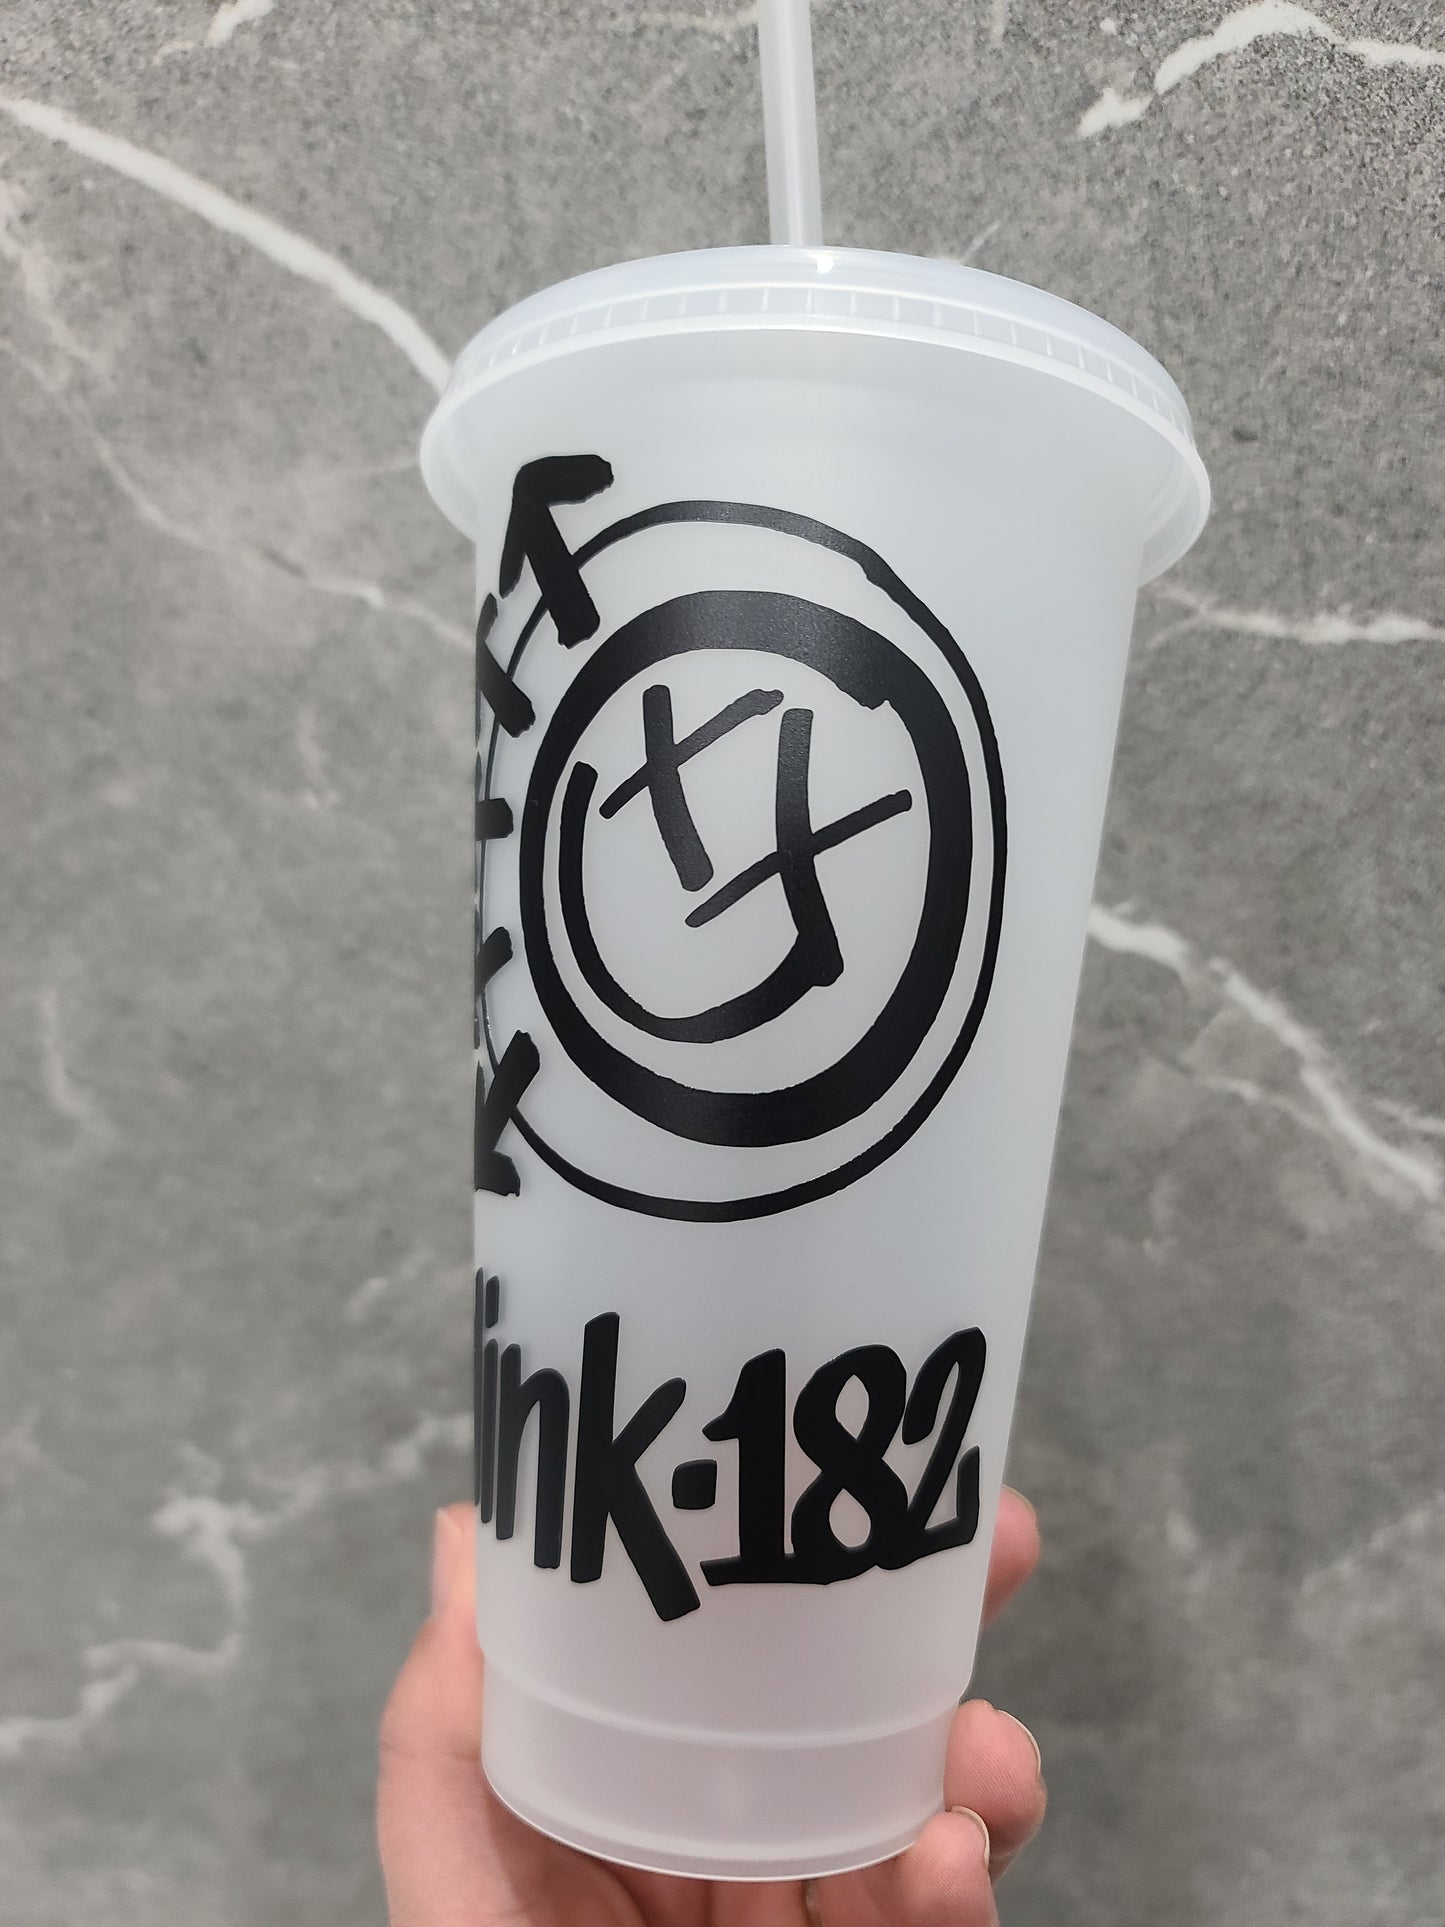 Blink 182 Logo Cup